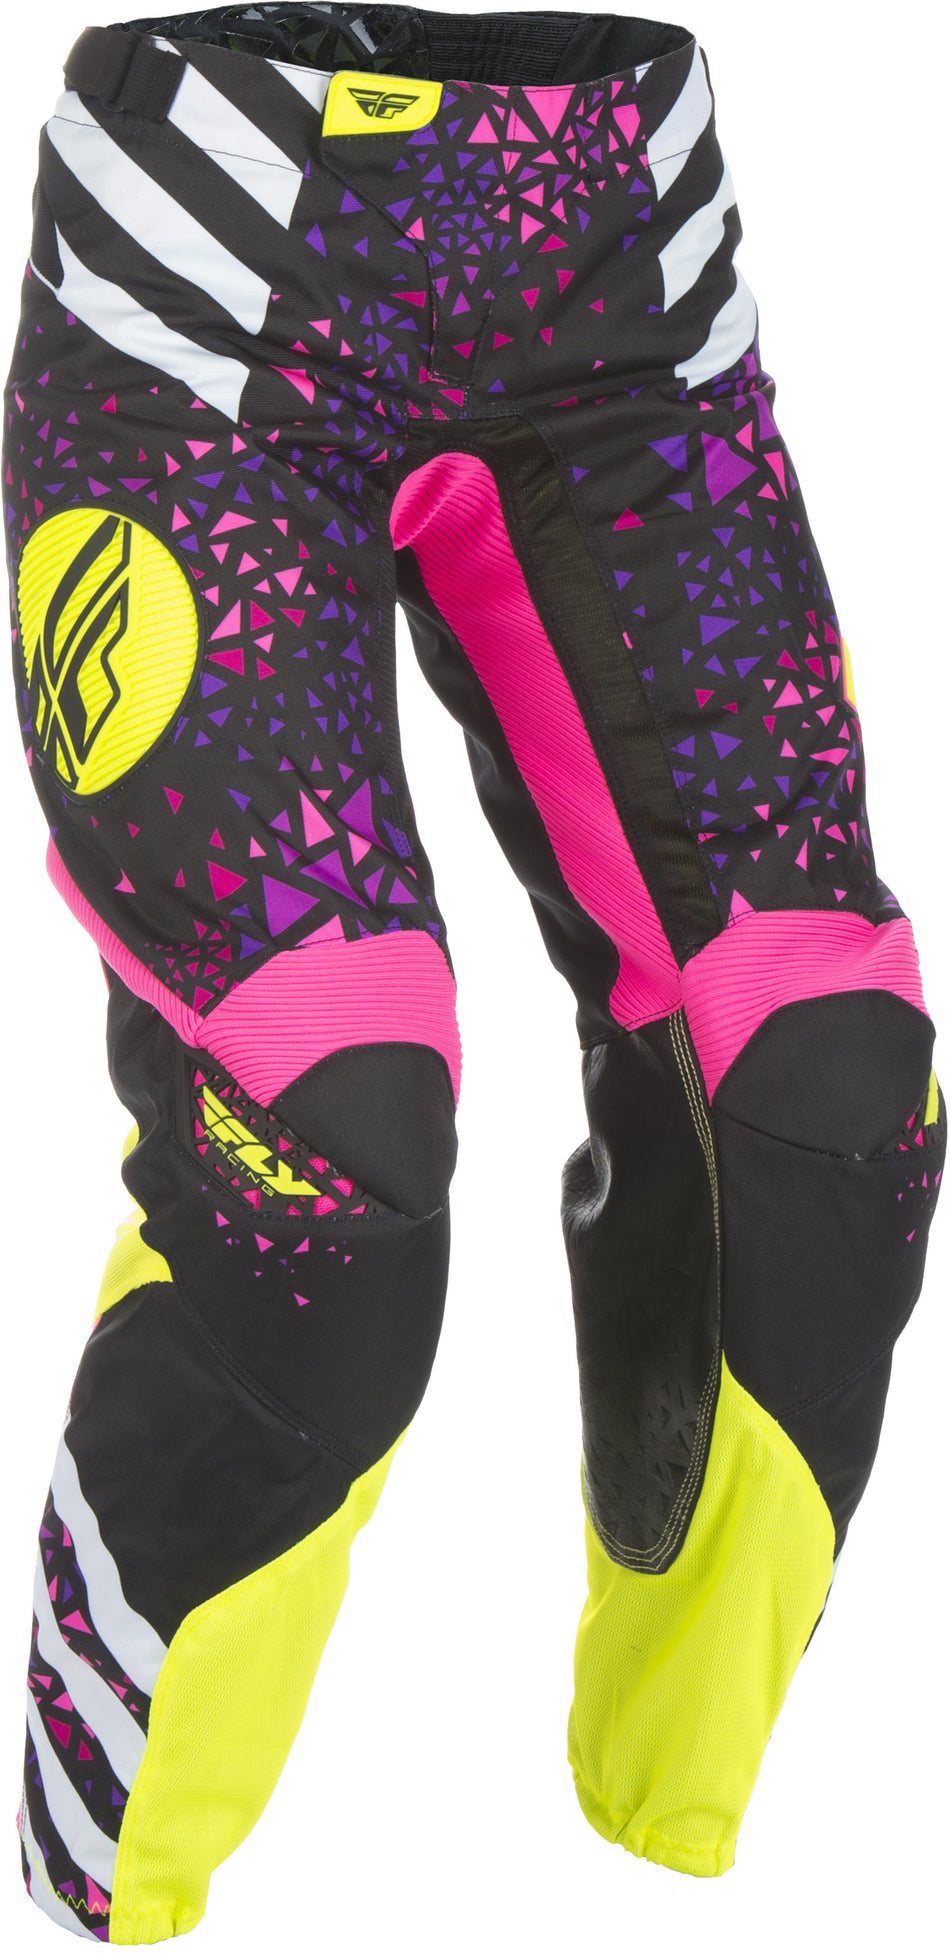 FLY RACING Kinetic Women's Race Pants Neon/Pink/Hi-Vis Sz 11/12 371-63909